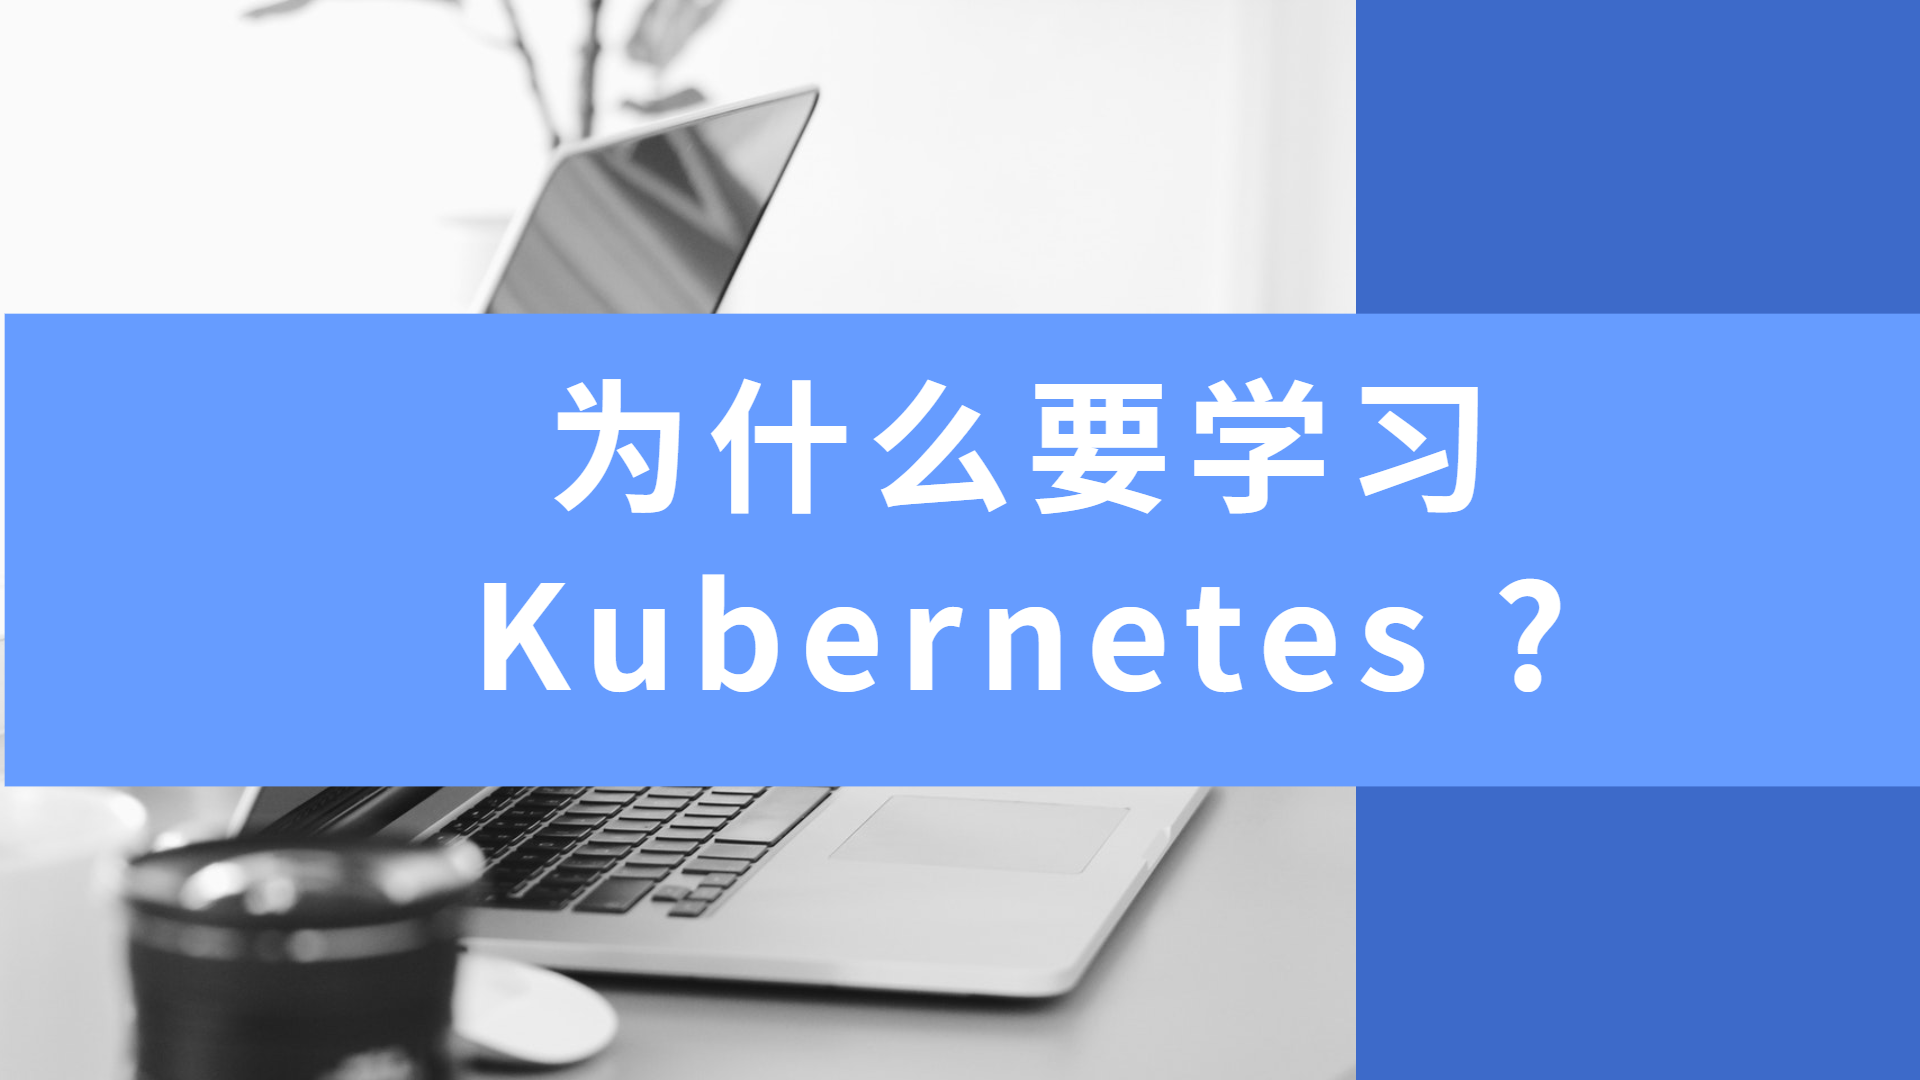 为什么要学习 Kubernetes ?